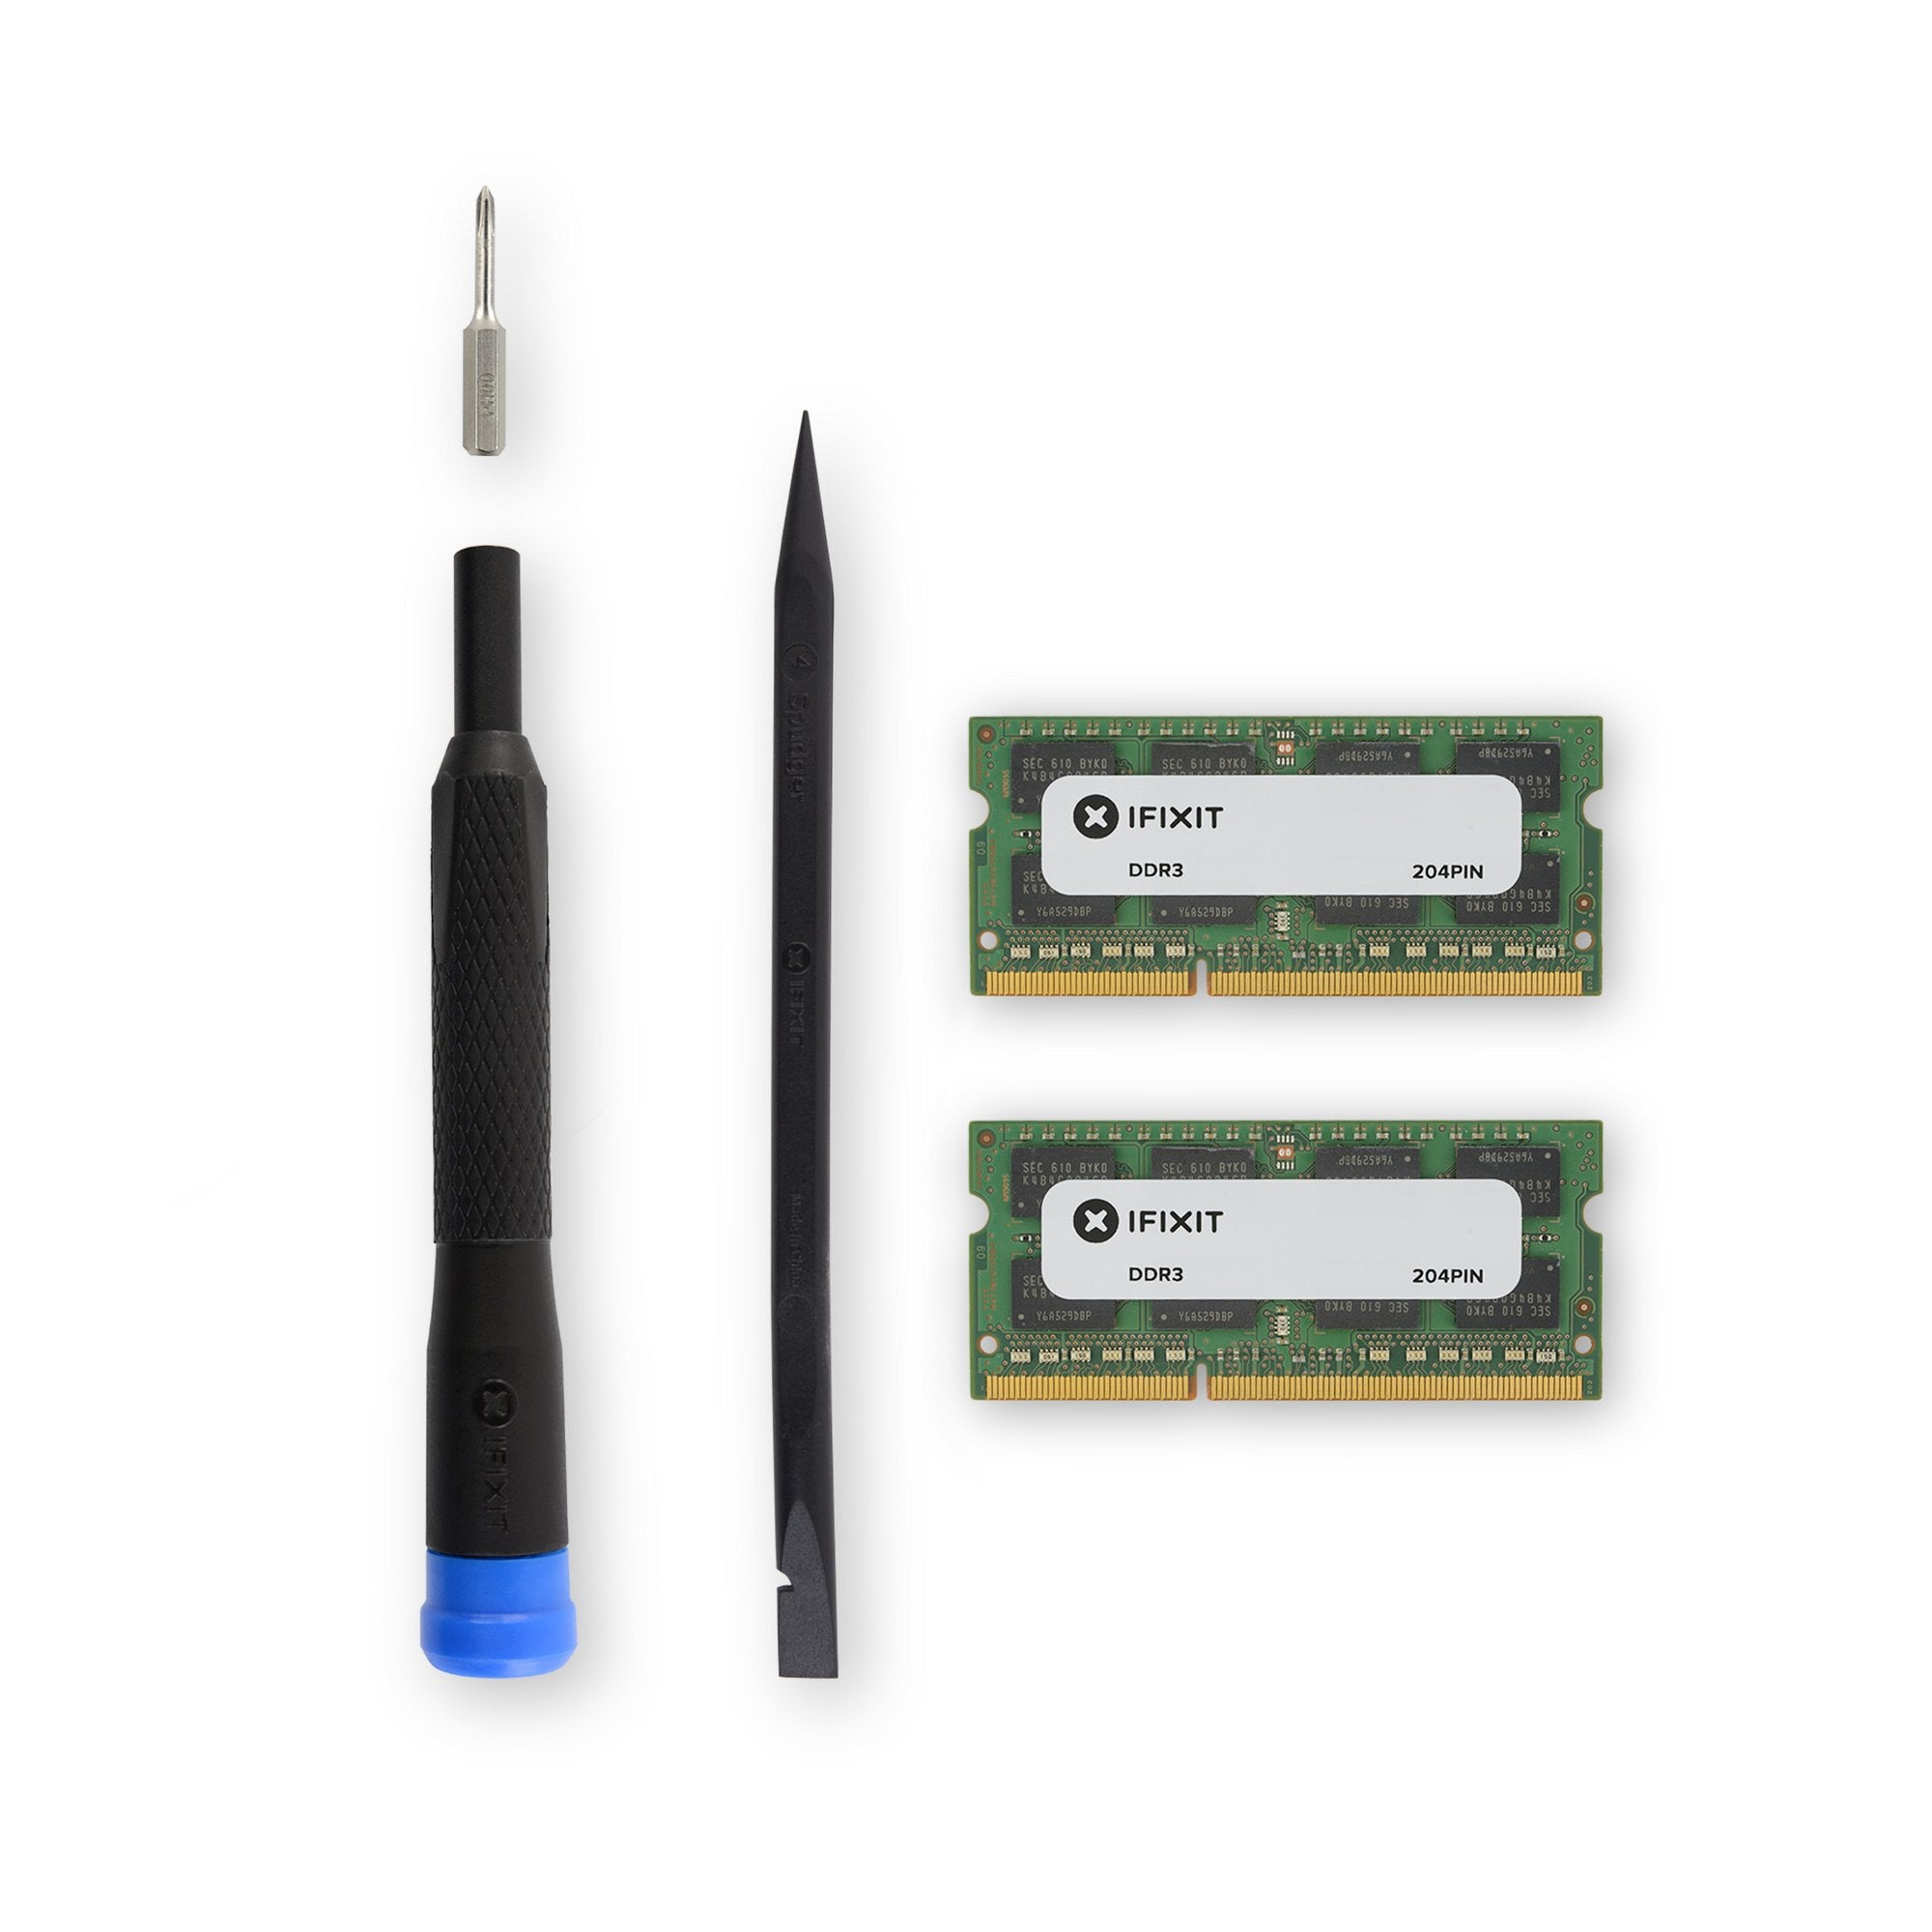 MacBook Pro 17" Unibody (Late 2011) Memory Maxxer RAM Upgrade Kit